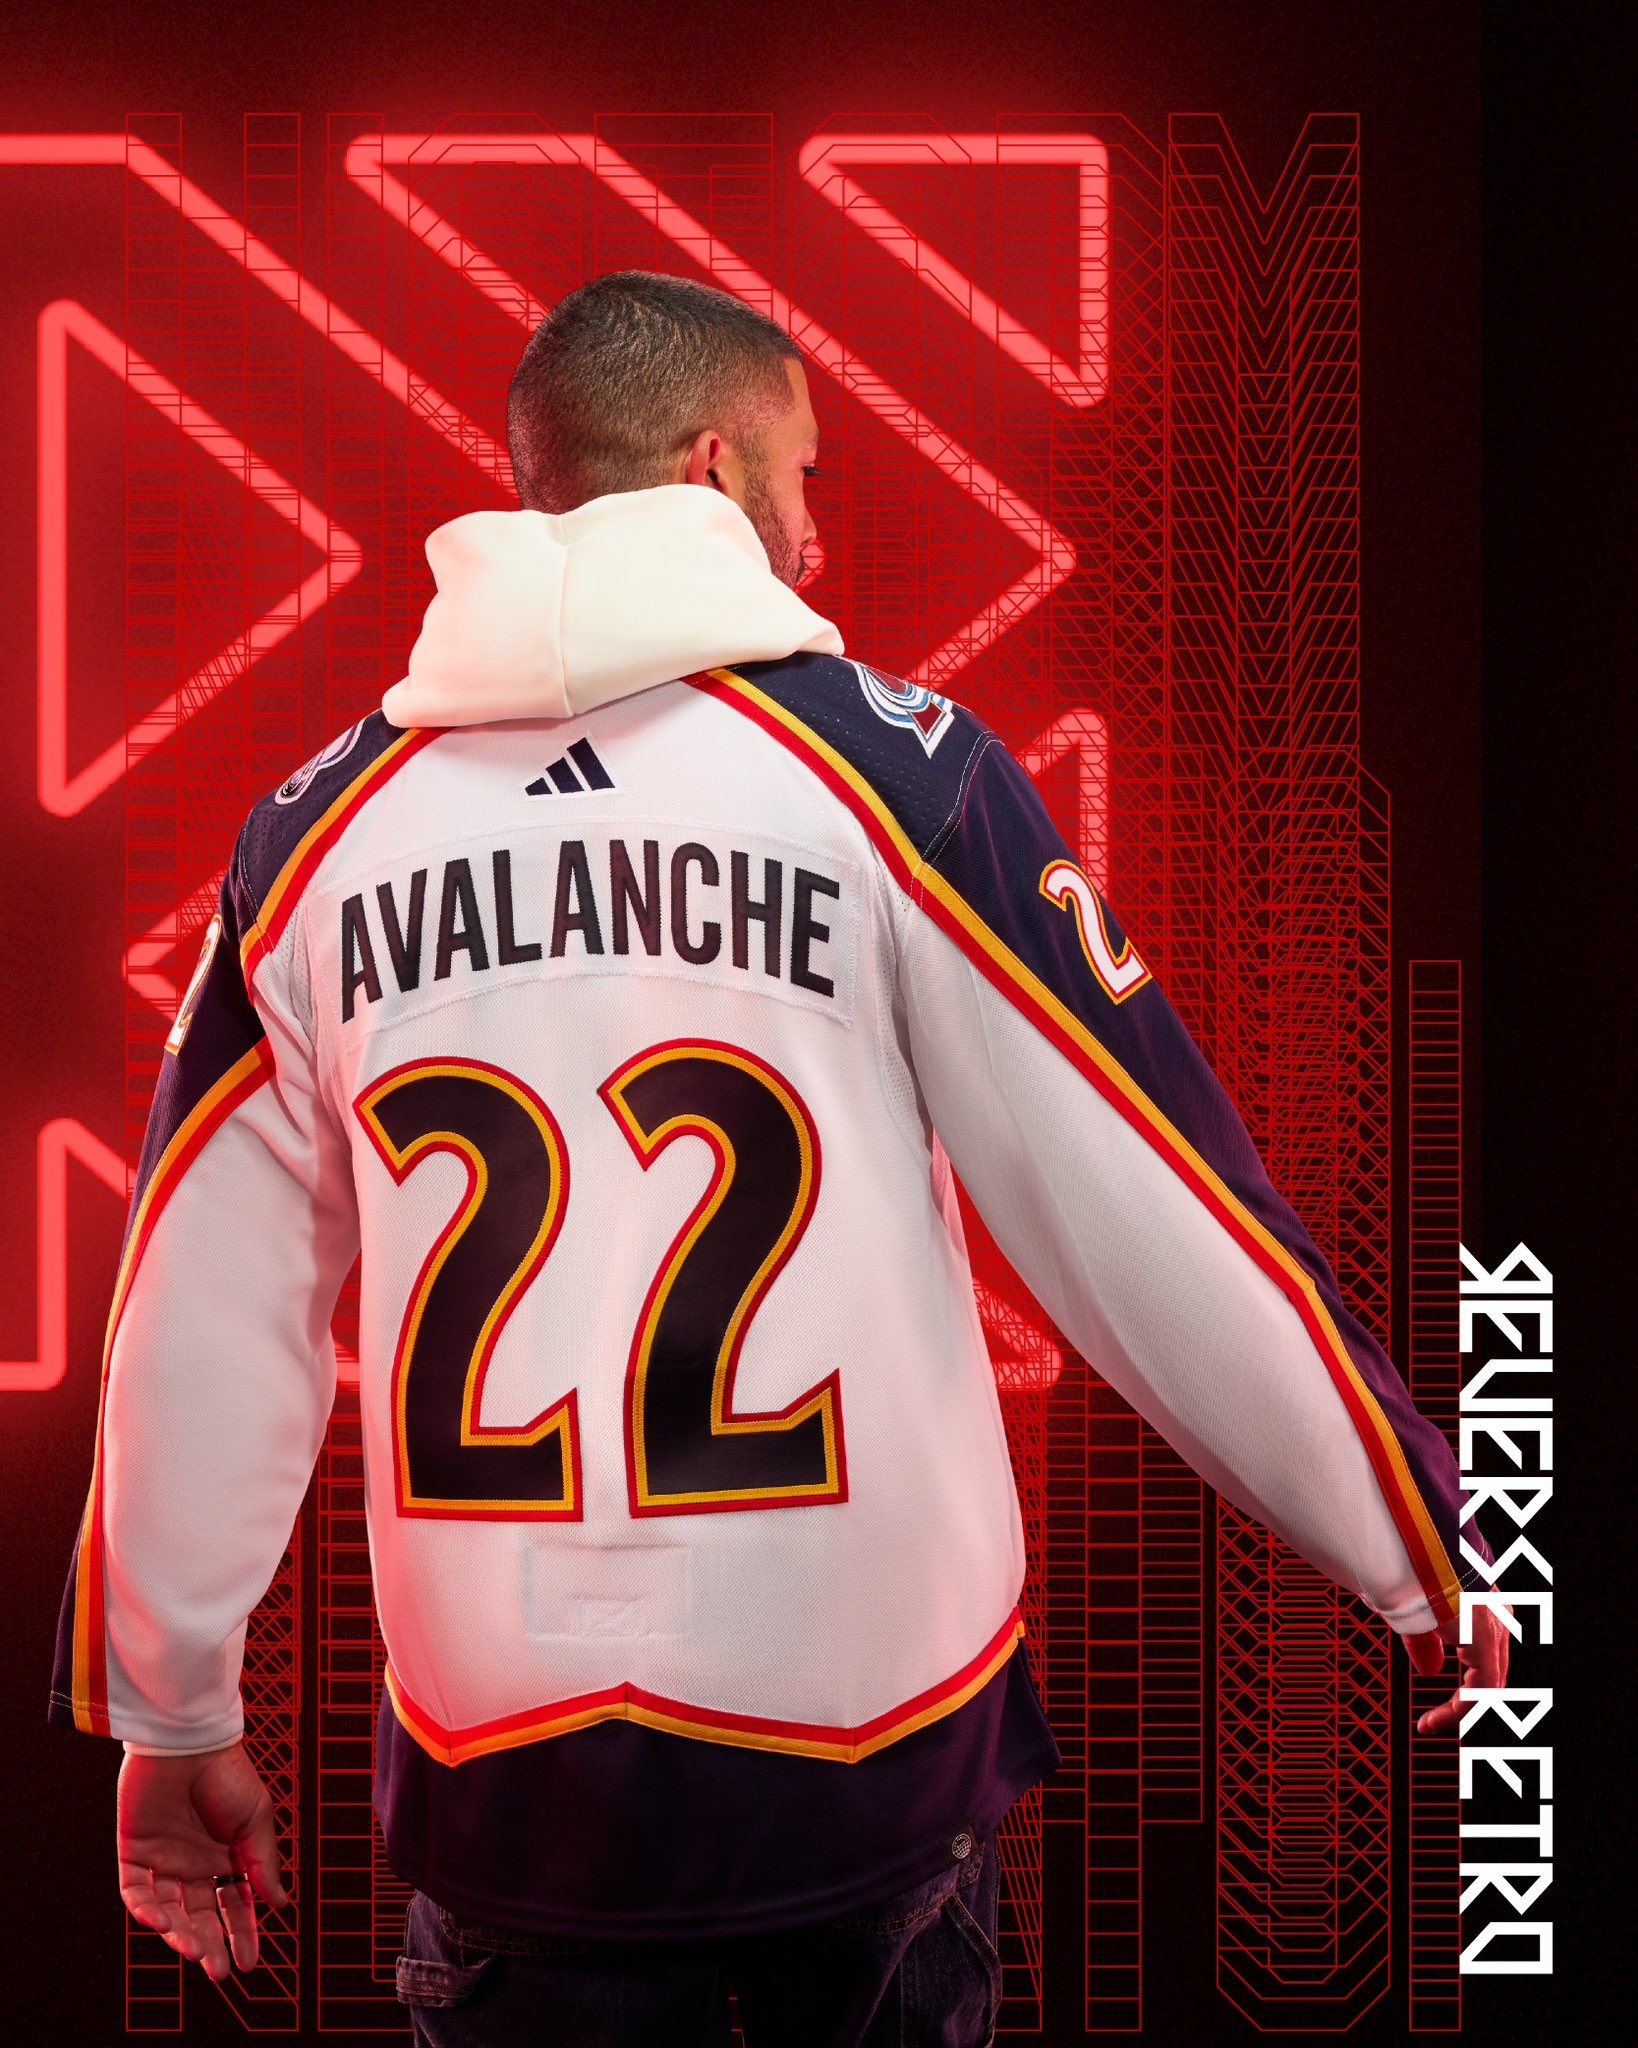 Avalanche] First full look at the Avs Reverse Retro Uniform. : r/hockey